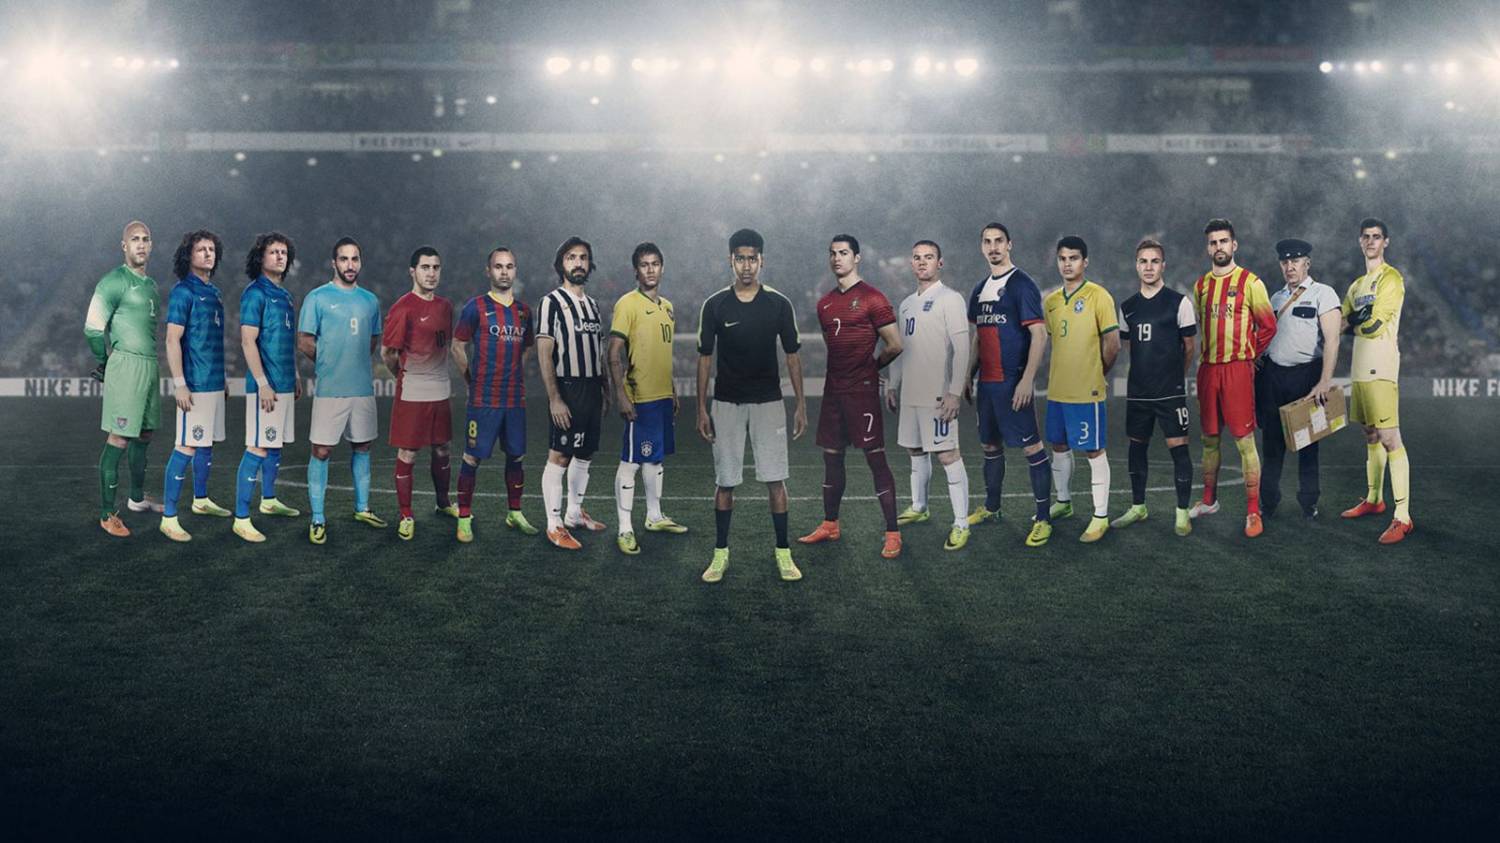 Музыка из рекламы Nike Football - Winner Stays (Ronaldo, Neymar Jr., Rooney, Ibrahimović, Iniesta)